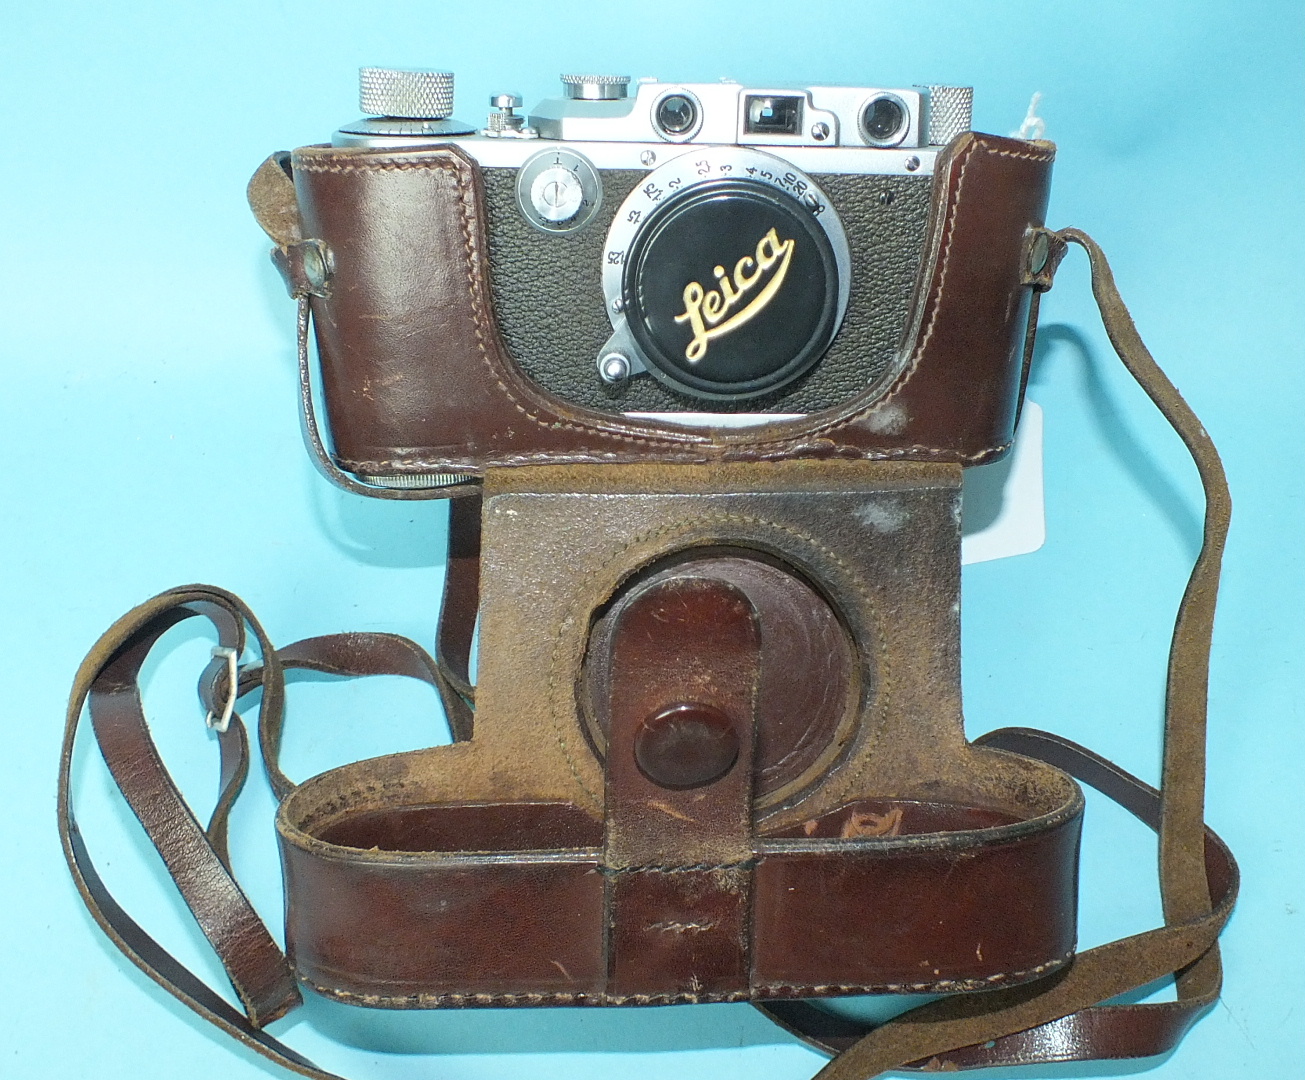 A Leica III Rangefinder camera, 1936/37 no.229984, with Leitz Elmar 1:3.5/50 lens no.037616 with